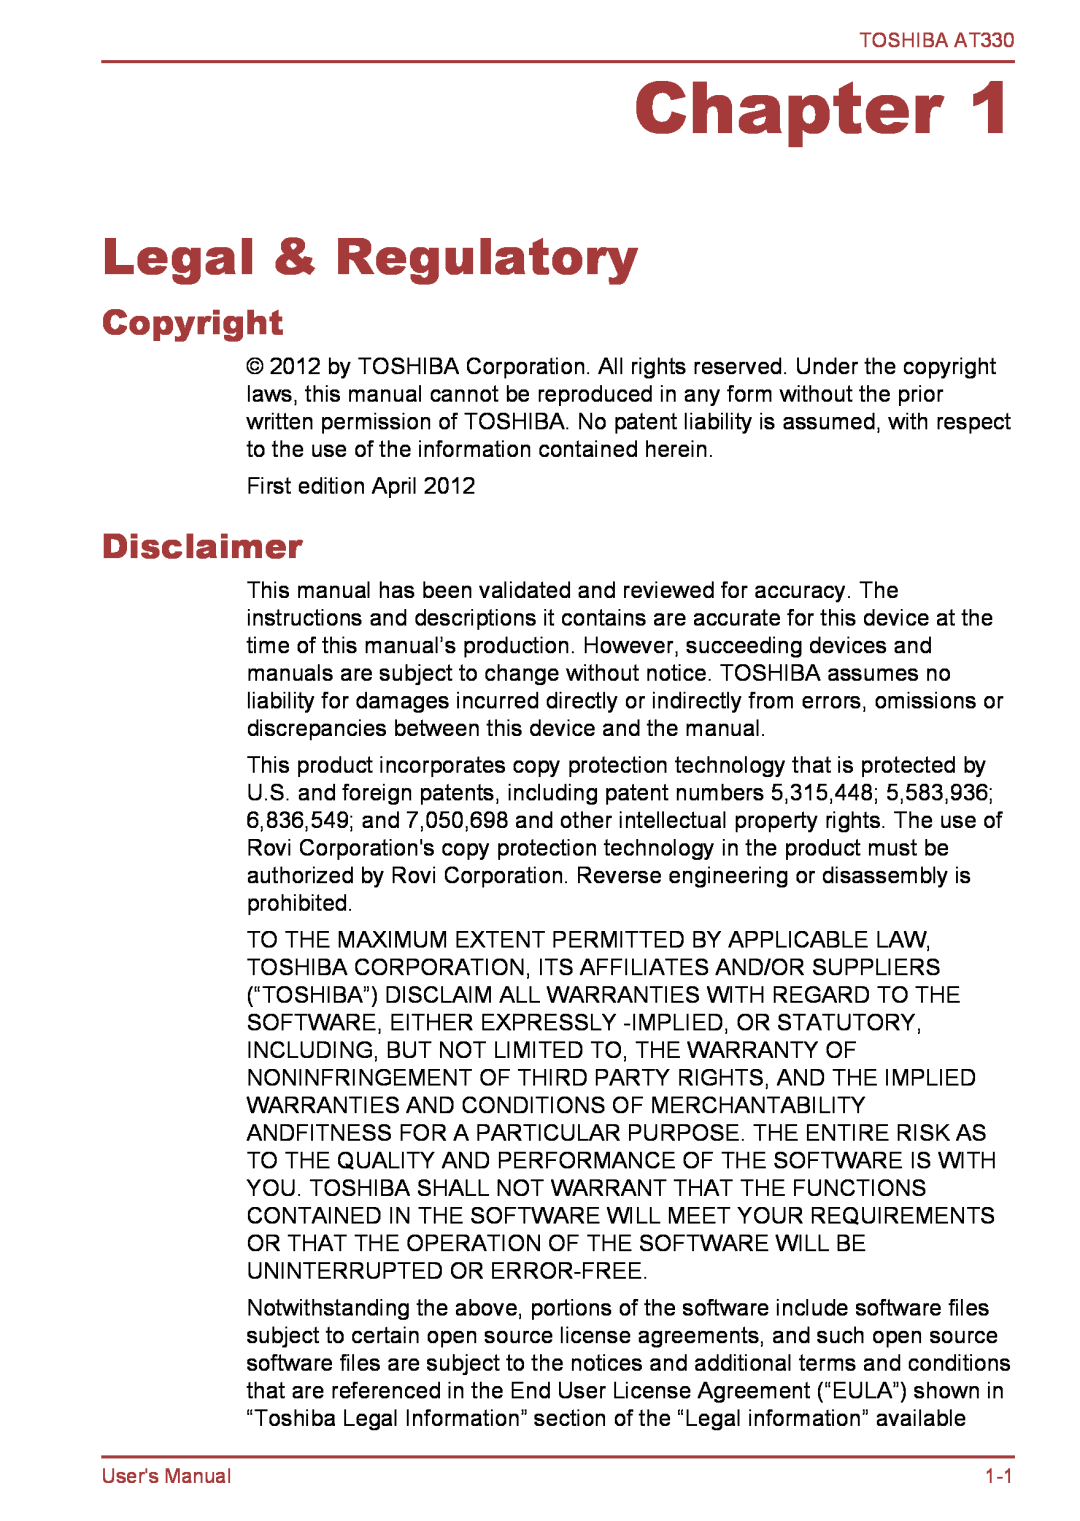 Toshiba at330 user manual Chapter, Legal & Regulatory, Copyright, Disclaimer 